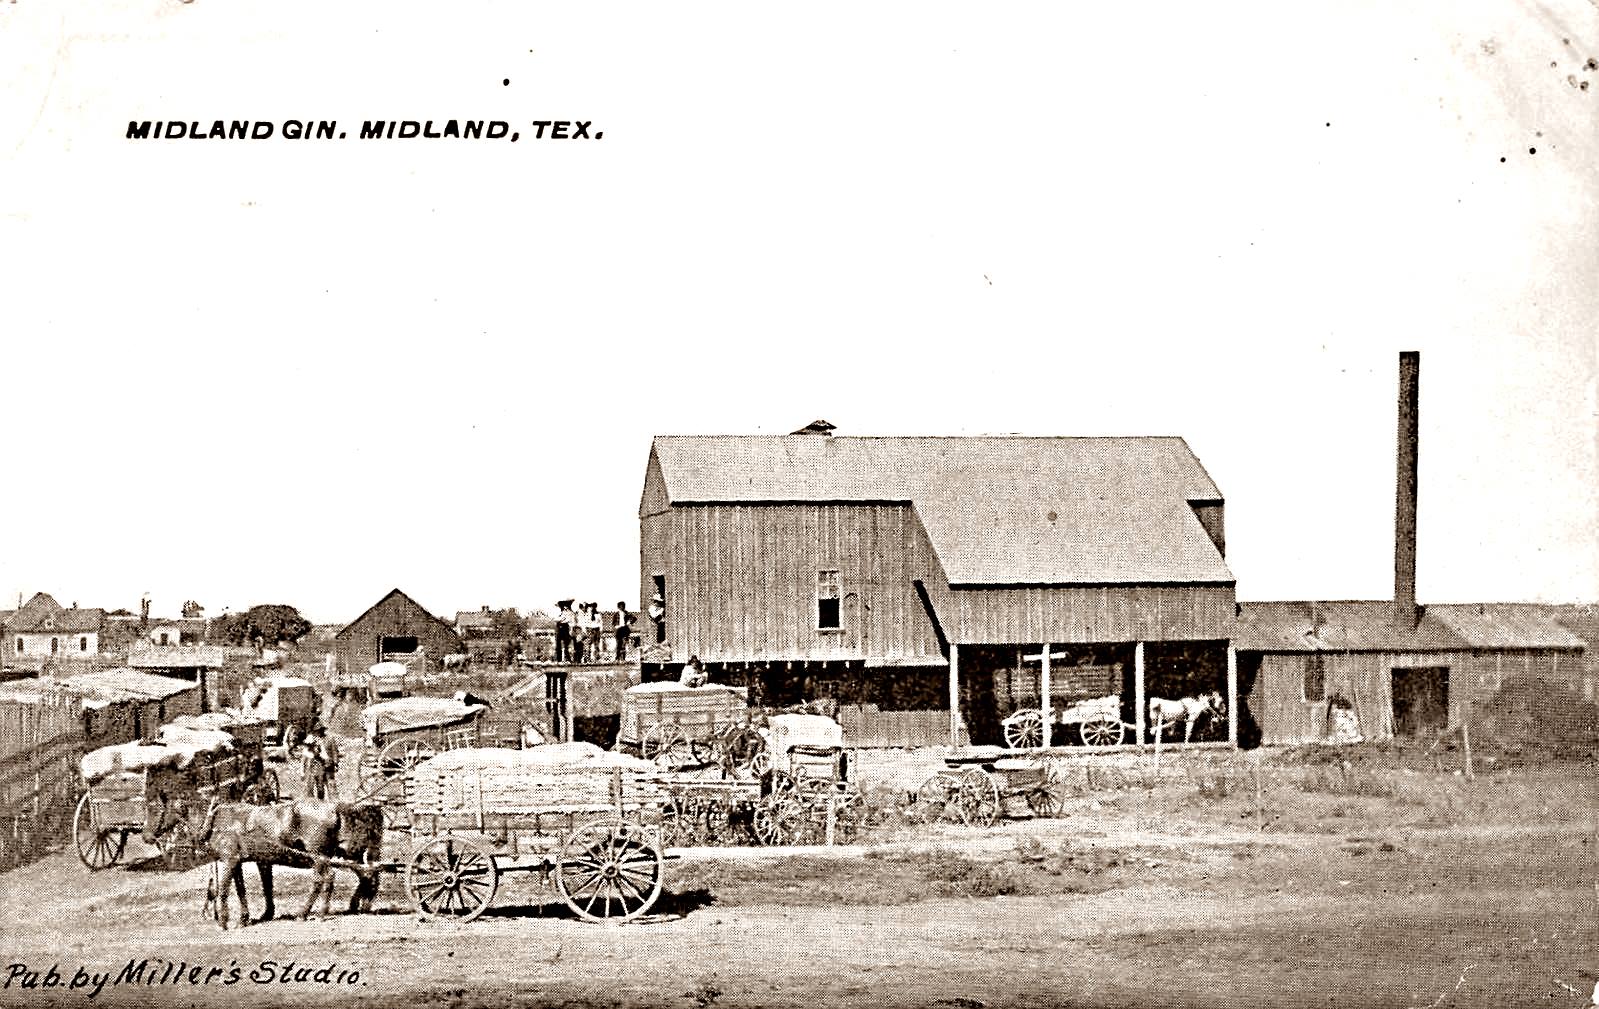 Midland Gin , Midland Texas in 1900